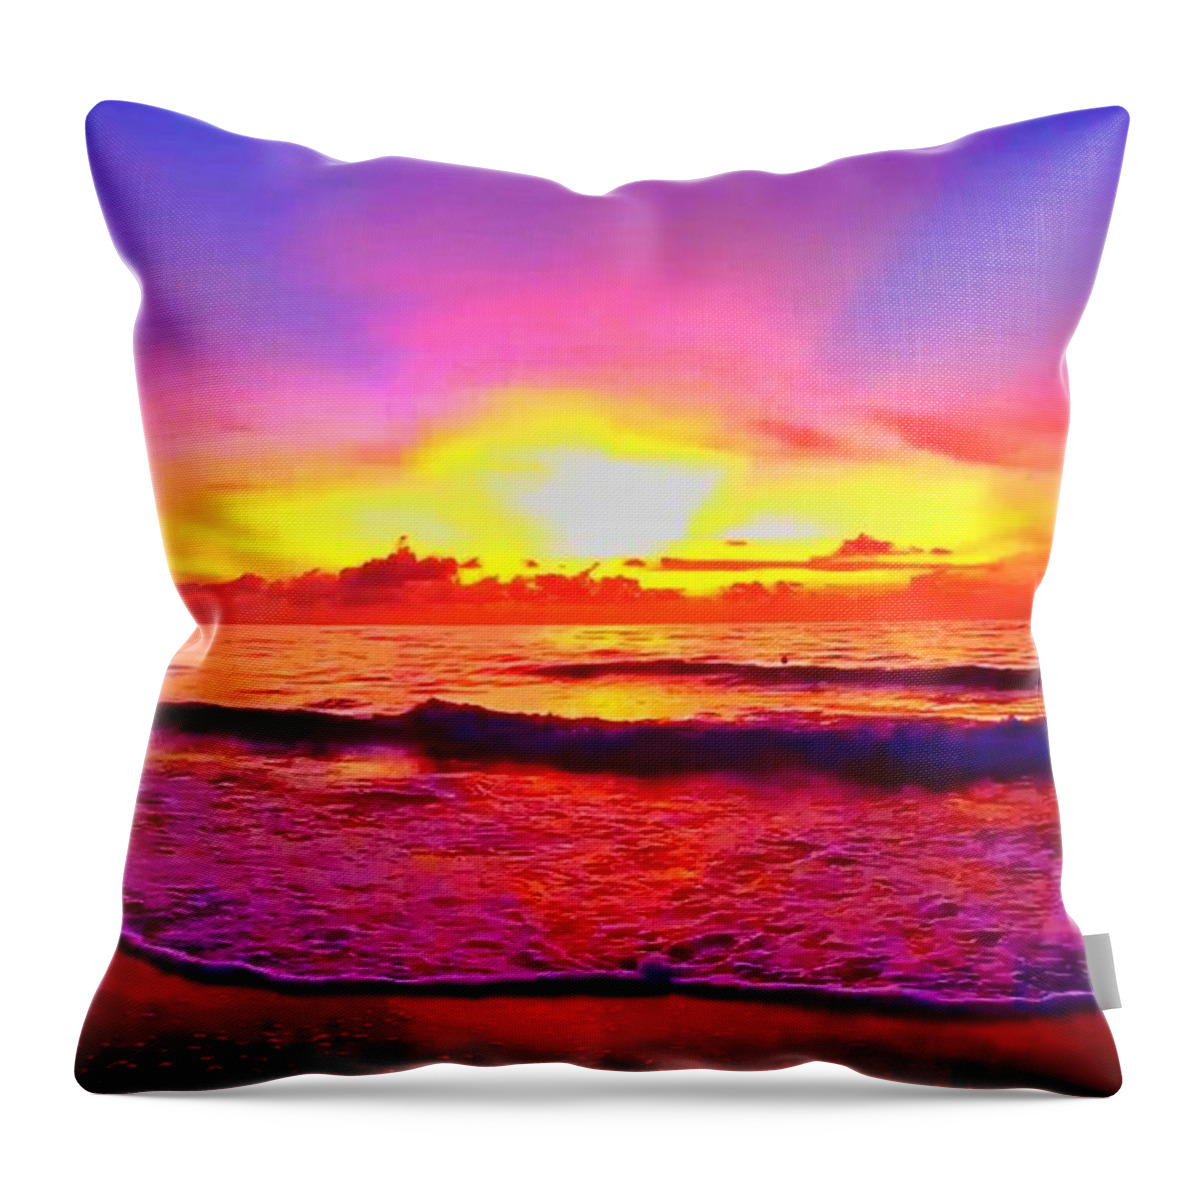 Sunrise Throw Pillow featuring the photograph Sunrise Beach 44 by Rip Read